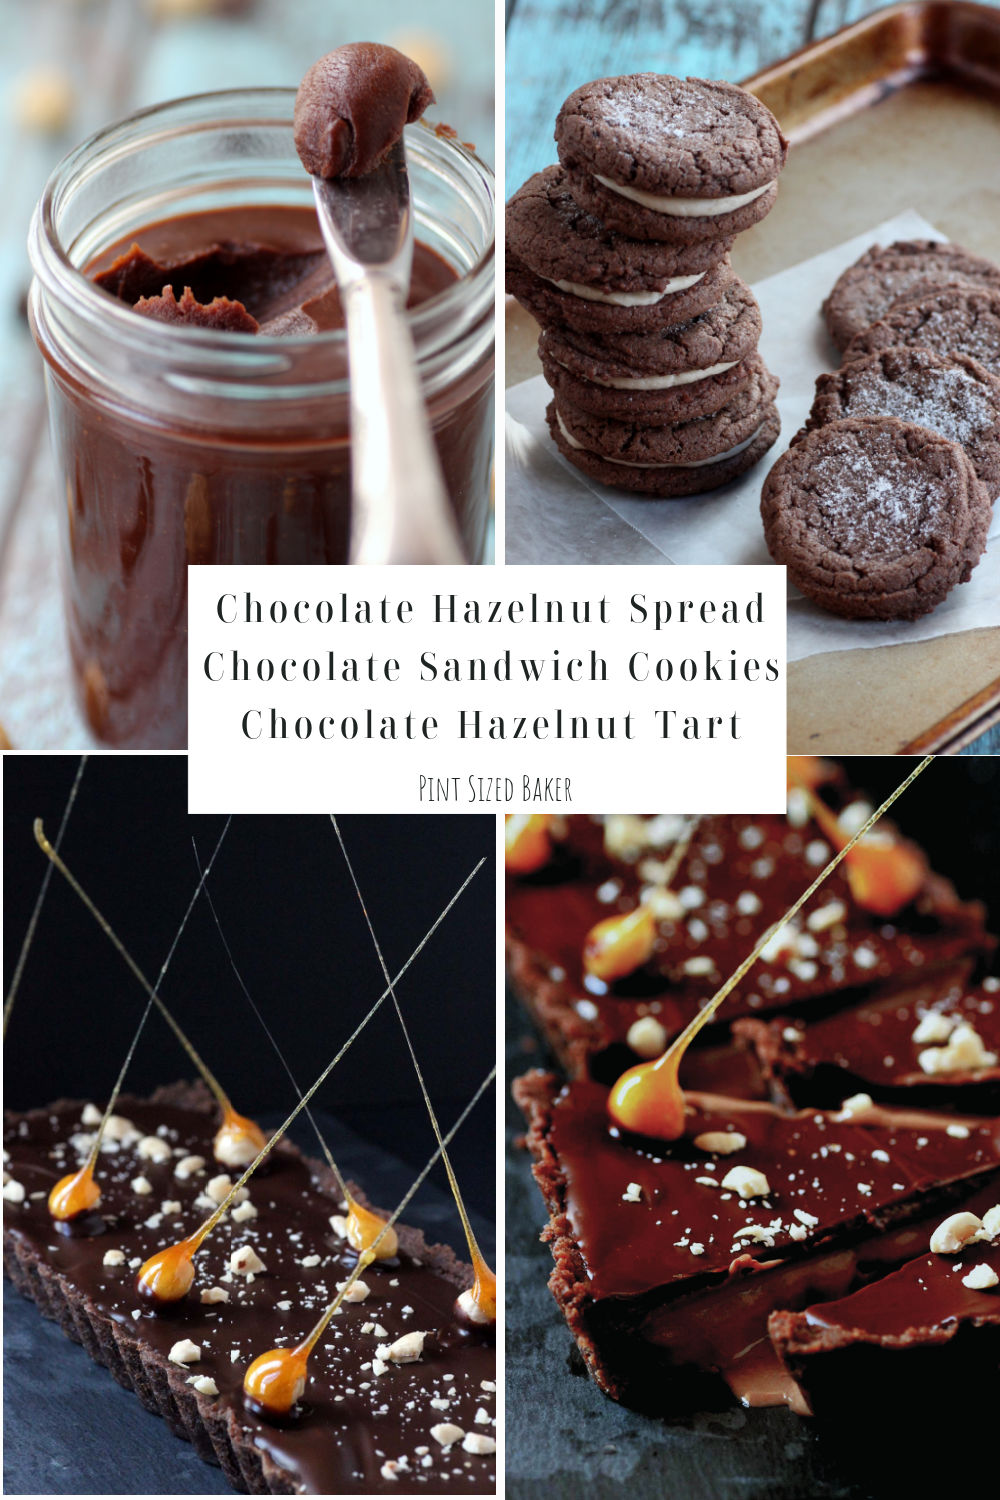 Chocolate Hazelnut Tart Recipe